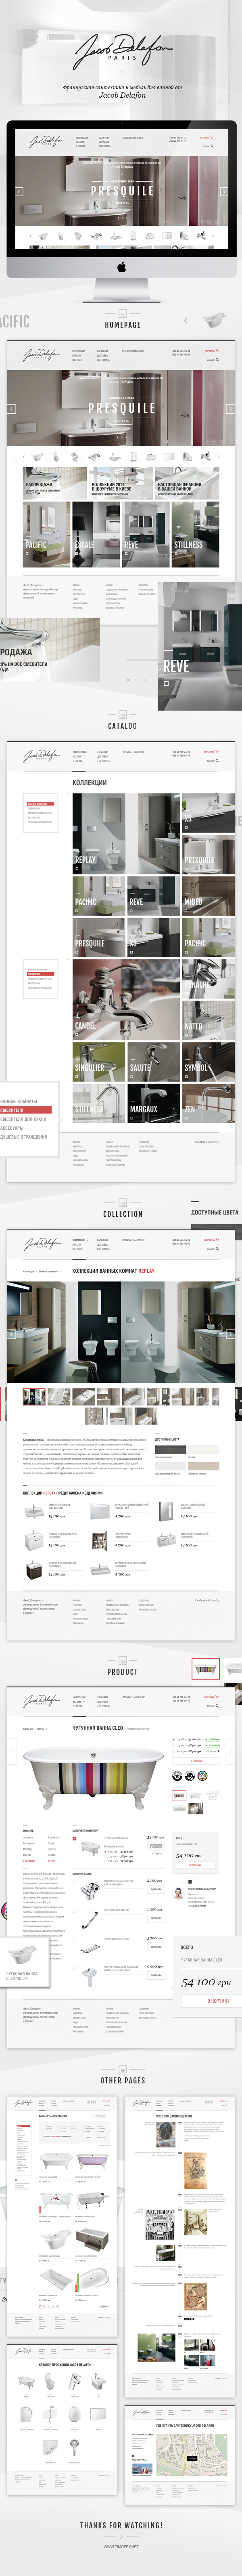 Web france bath bathroom Sanitary ware shop web-design Website